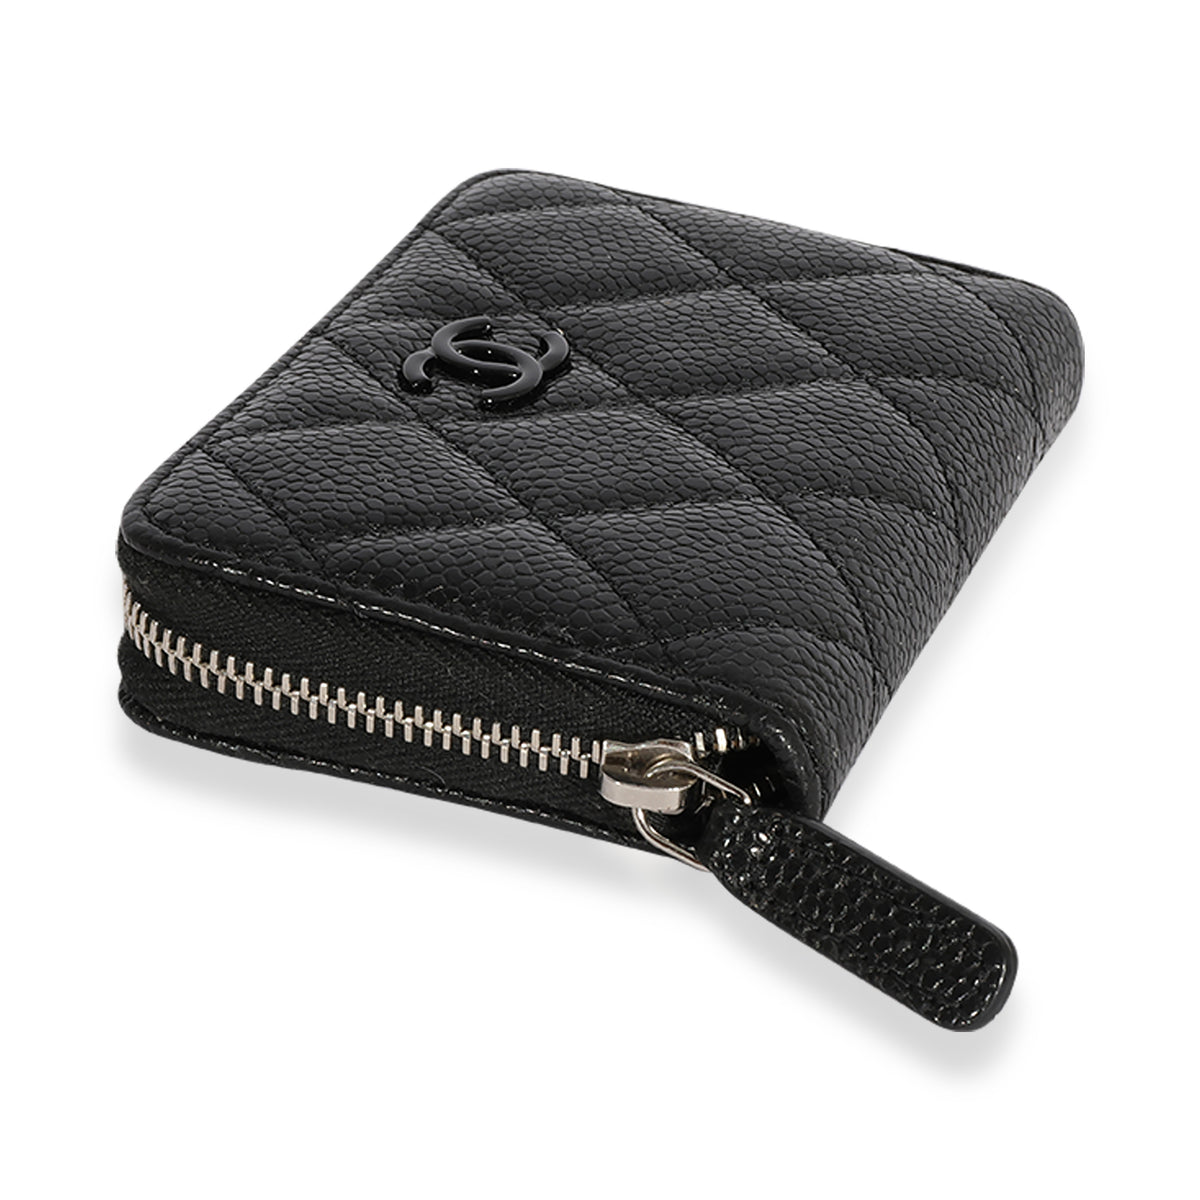 Chanel 19s iridescent zip coin purse wallet New